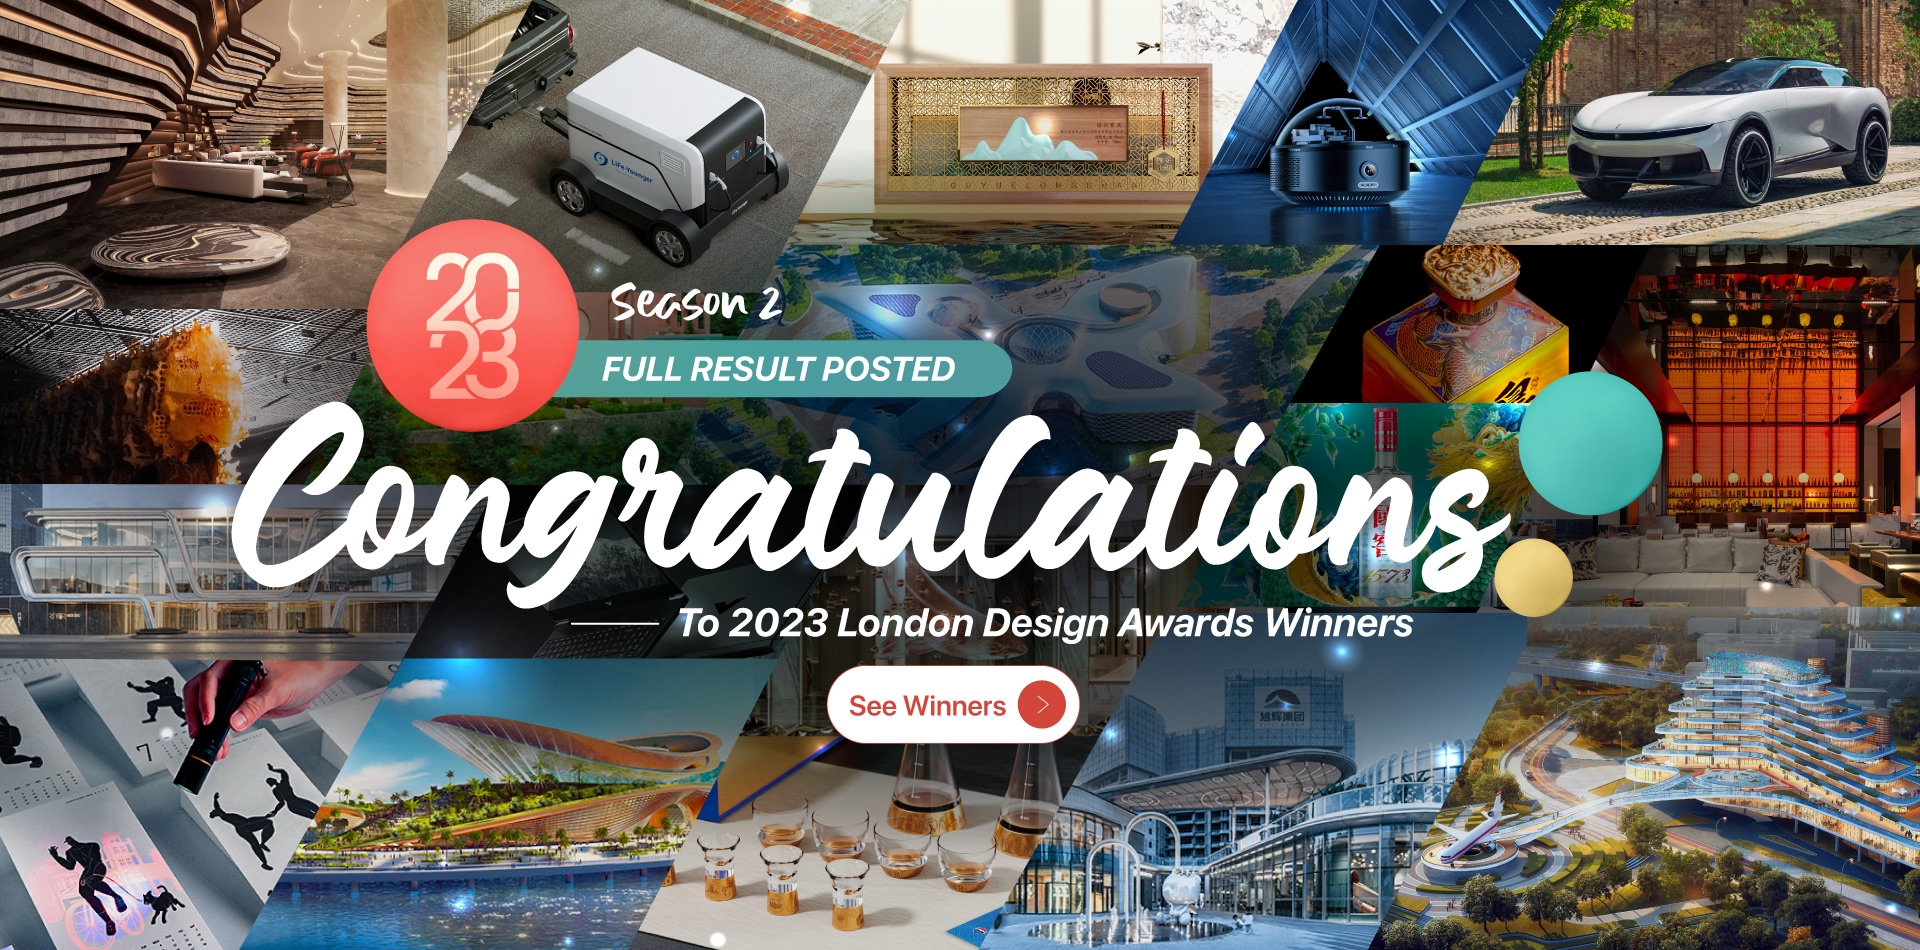 2023 London Design Awards Full Results Announced!